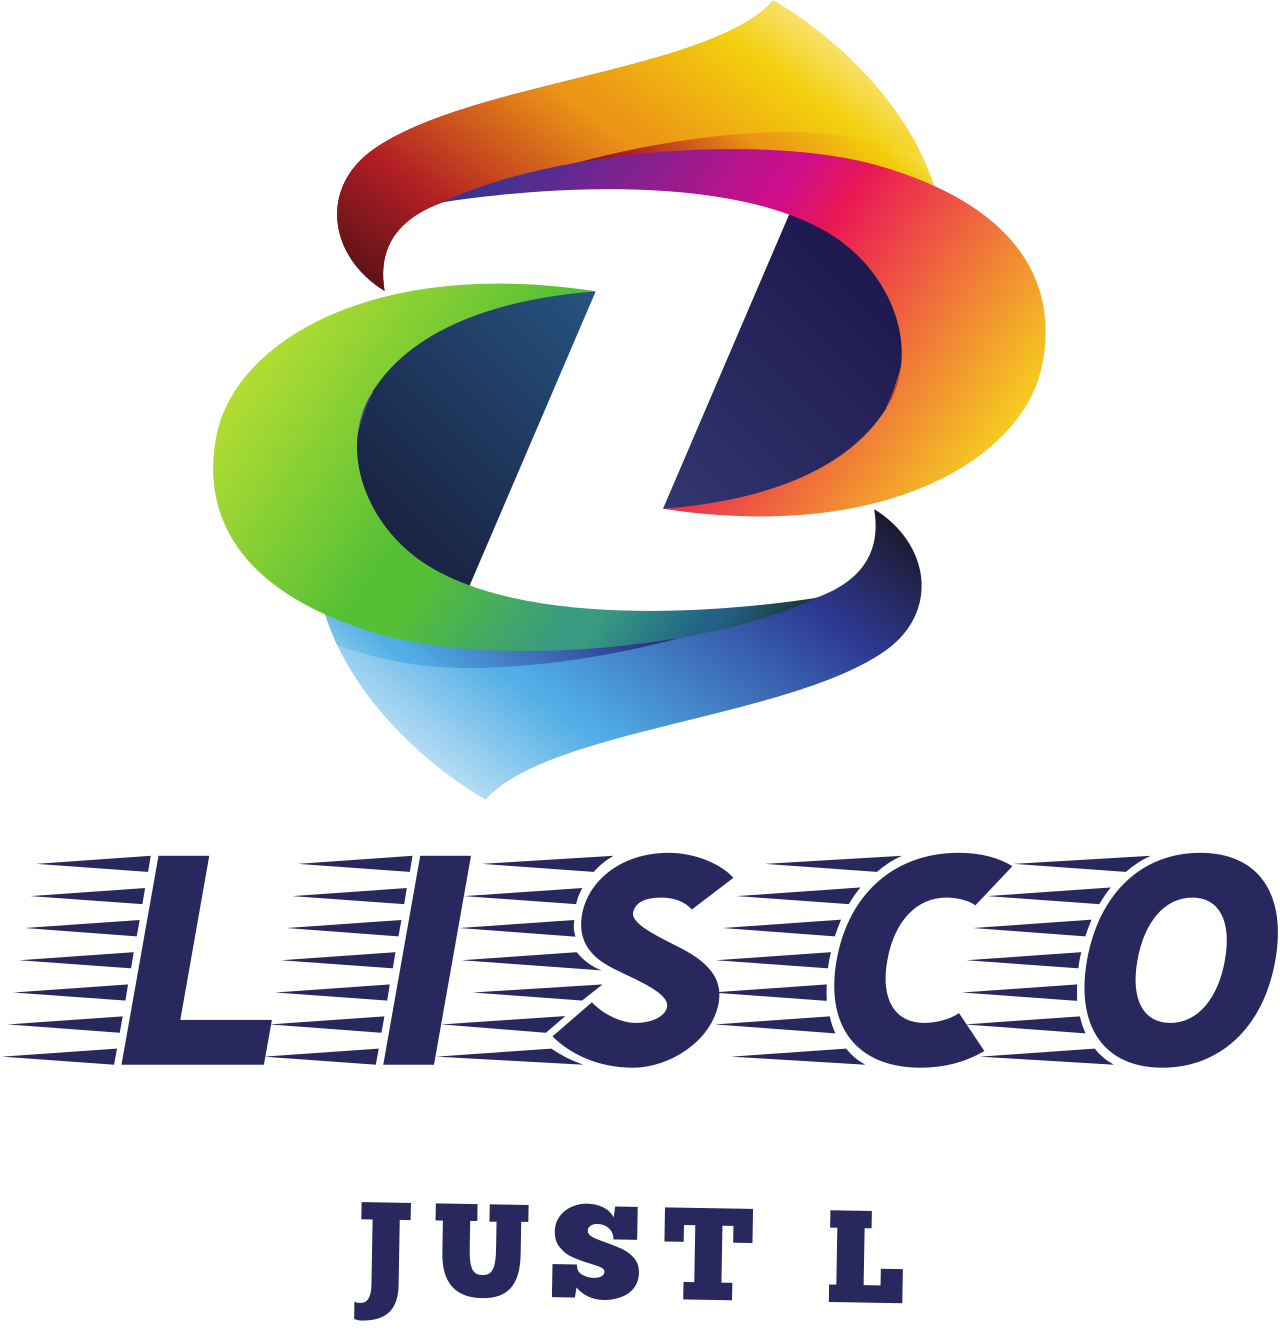 Lisco's web page